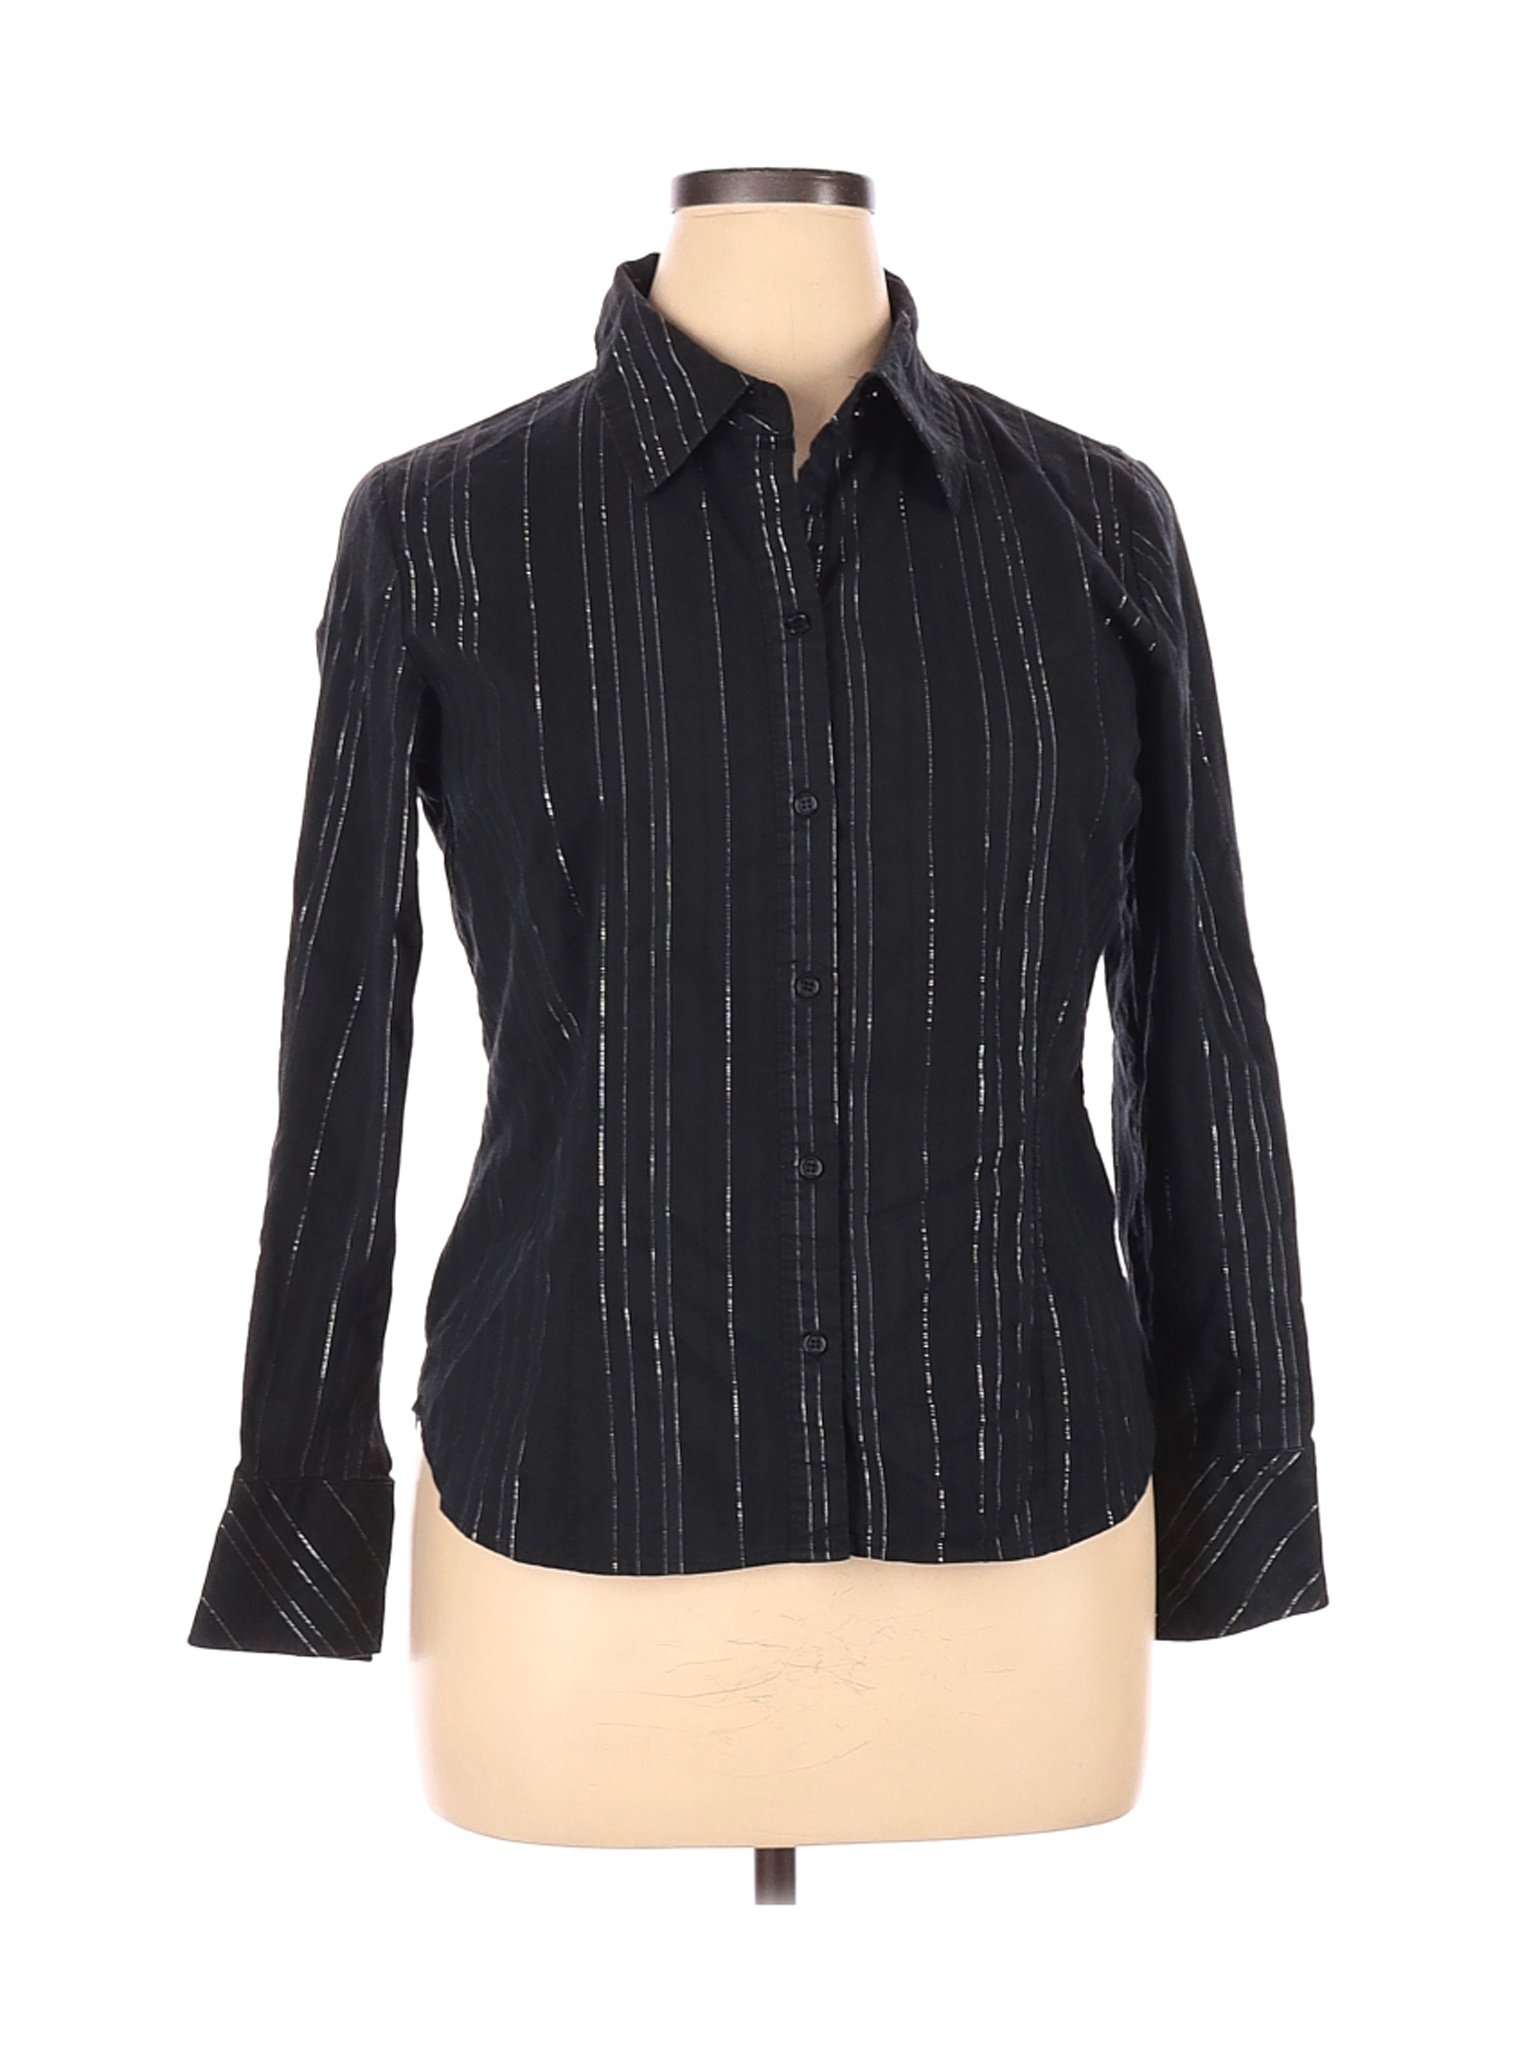 Apt. 9 Women Black Long Sleeve Button-Down Shirt XL | eBay